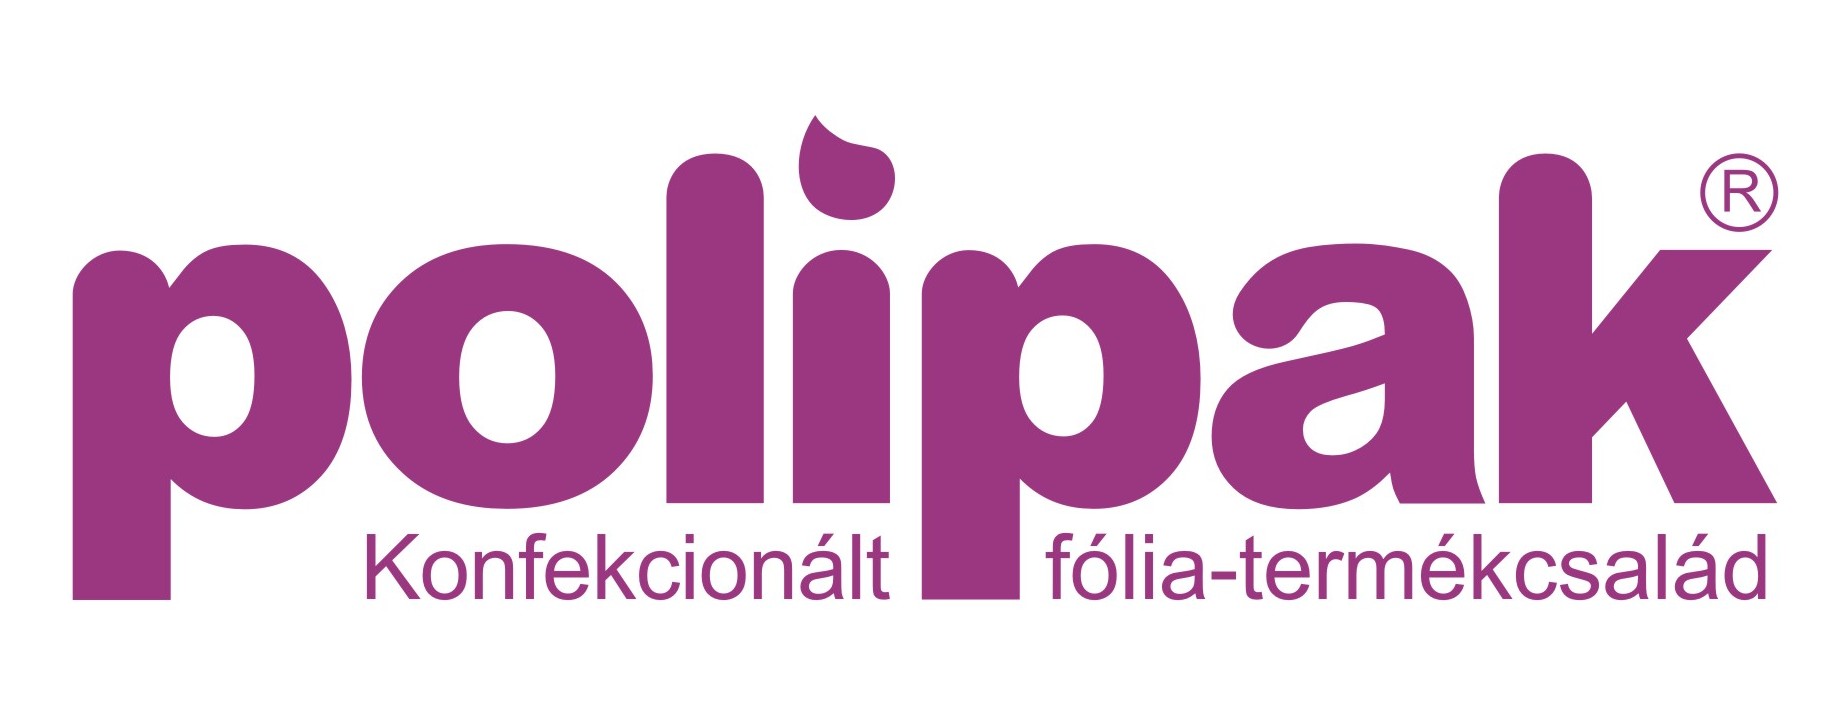 Polipak logo